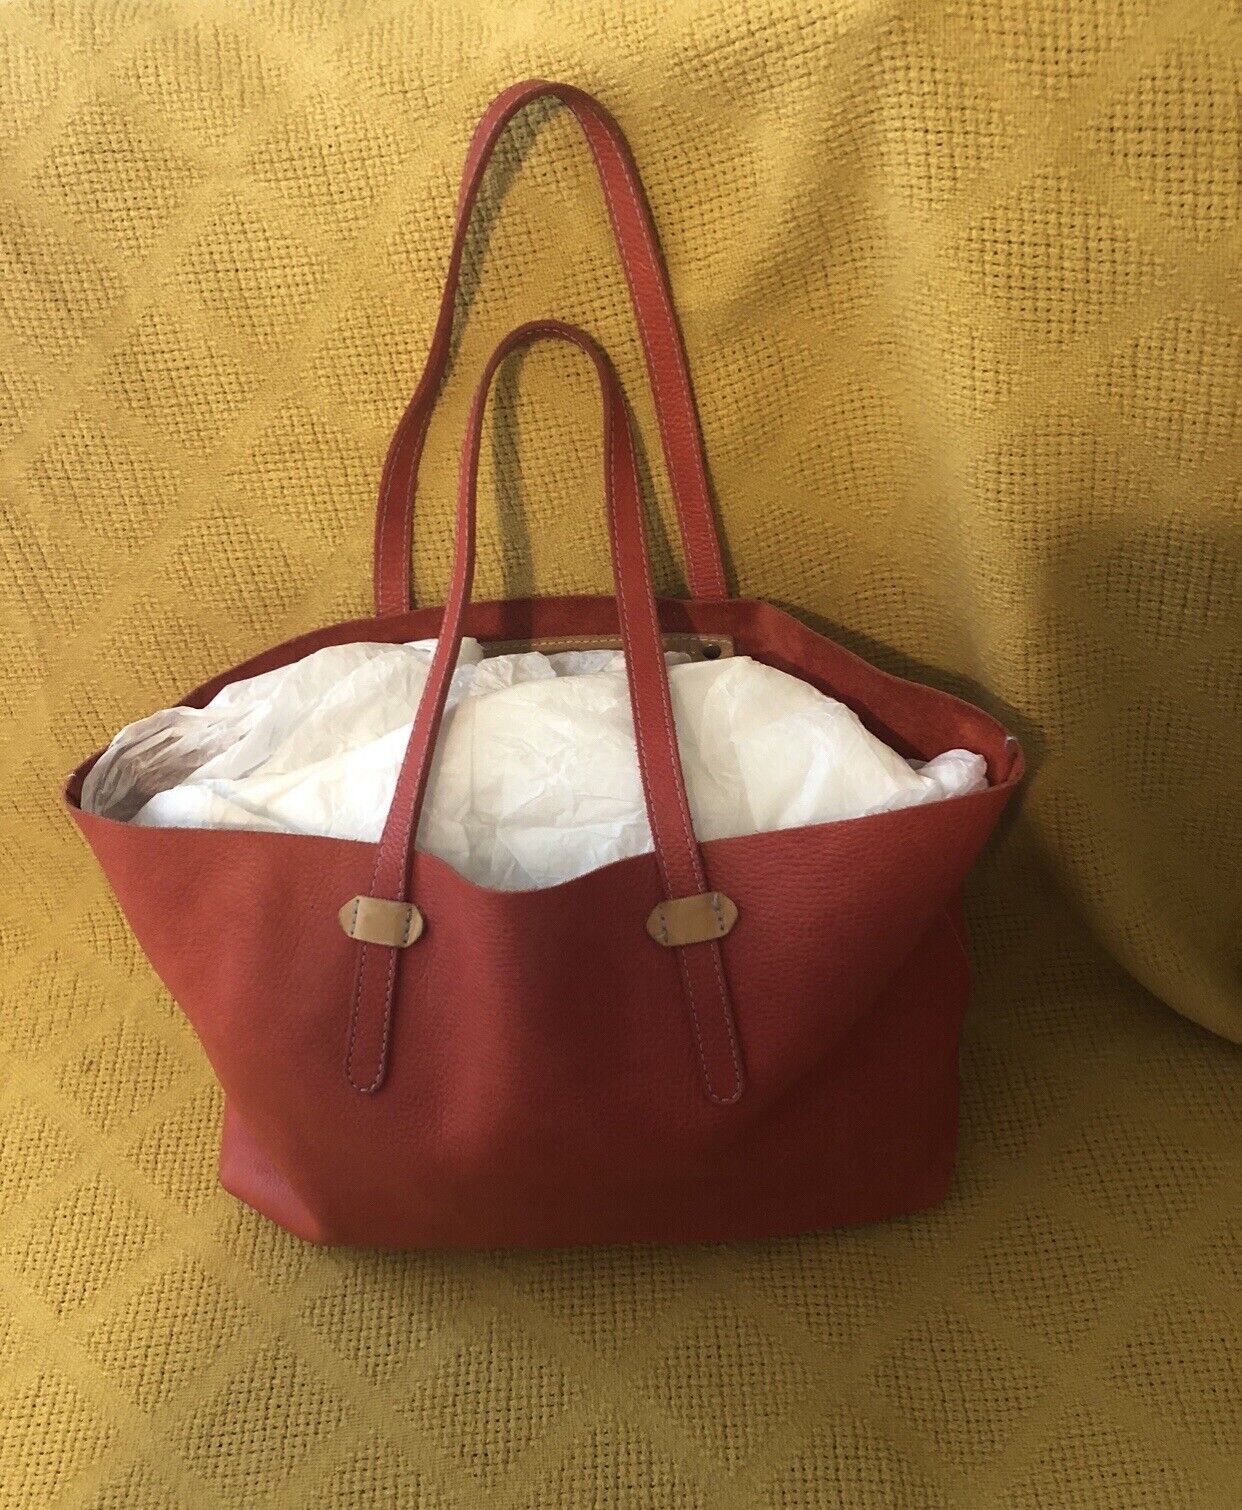 CONSUELA Soft Leather Red Handbag - New w/ Minor Defects.